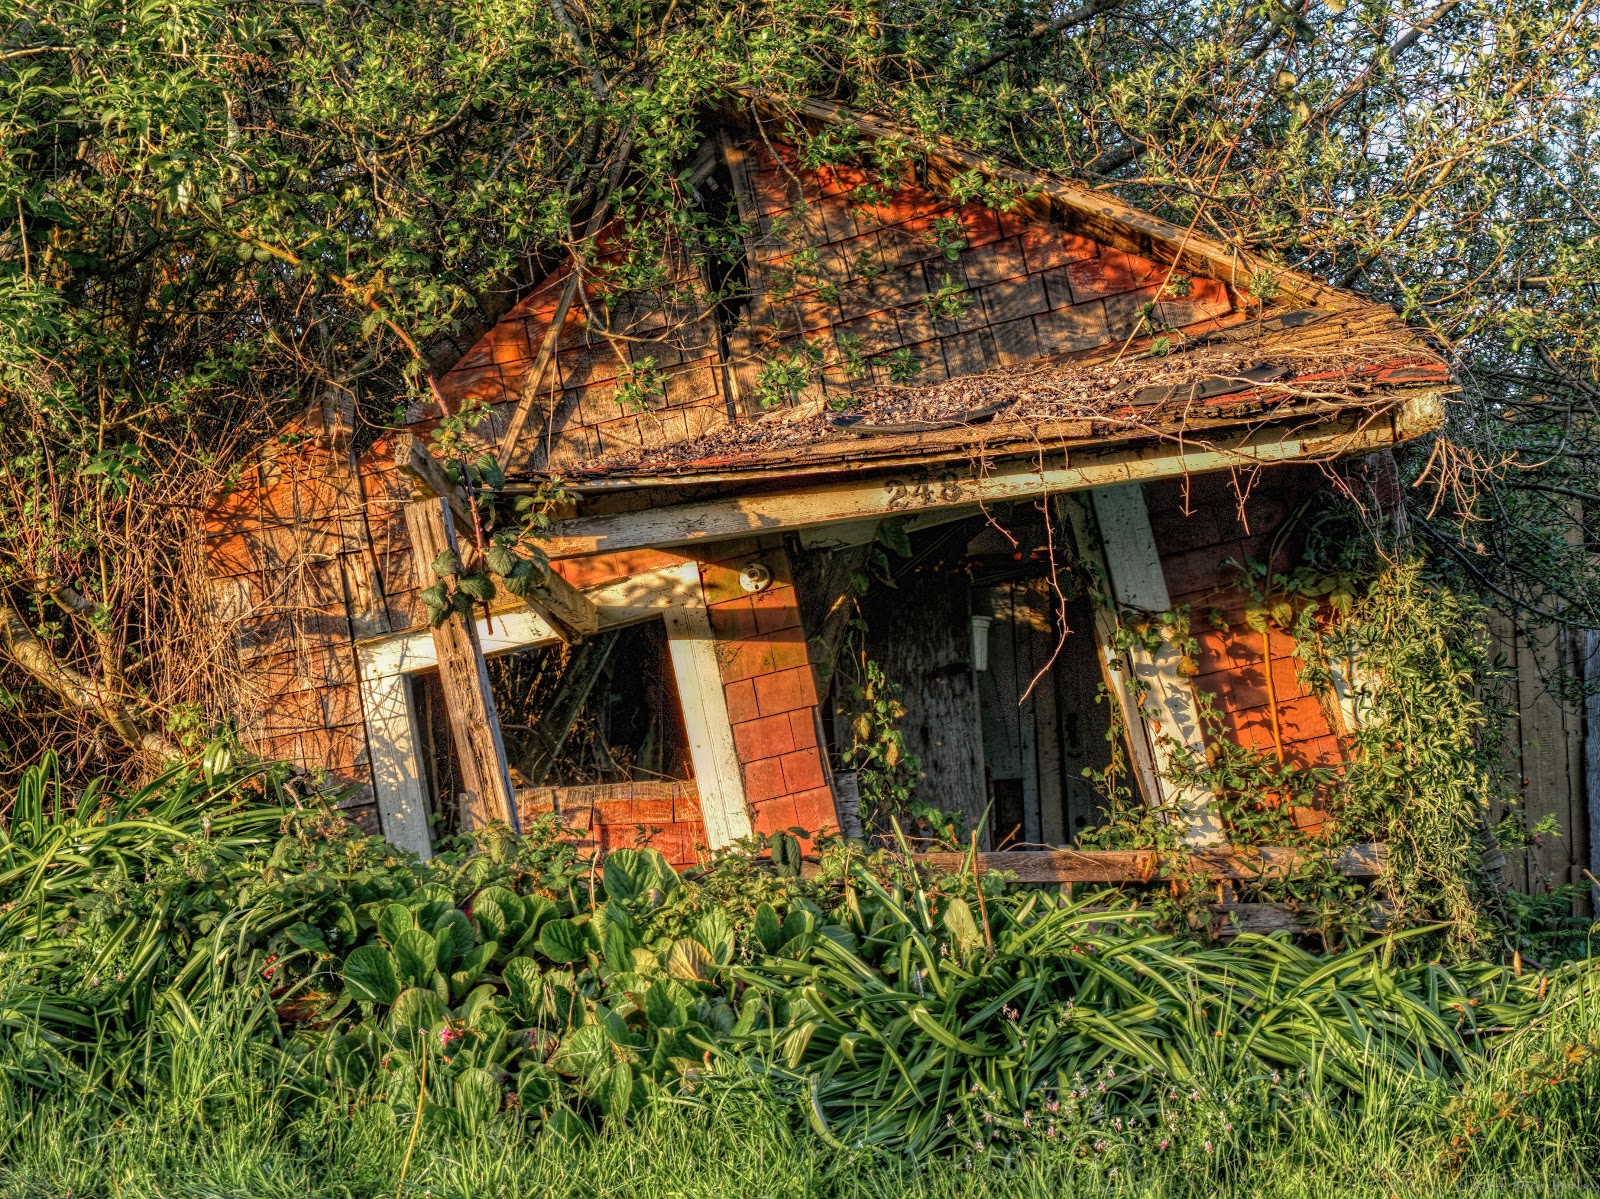 Overgrown dilapidated house